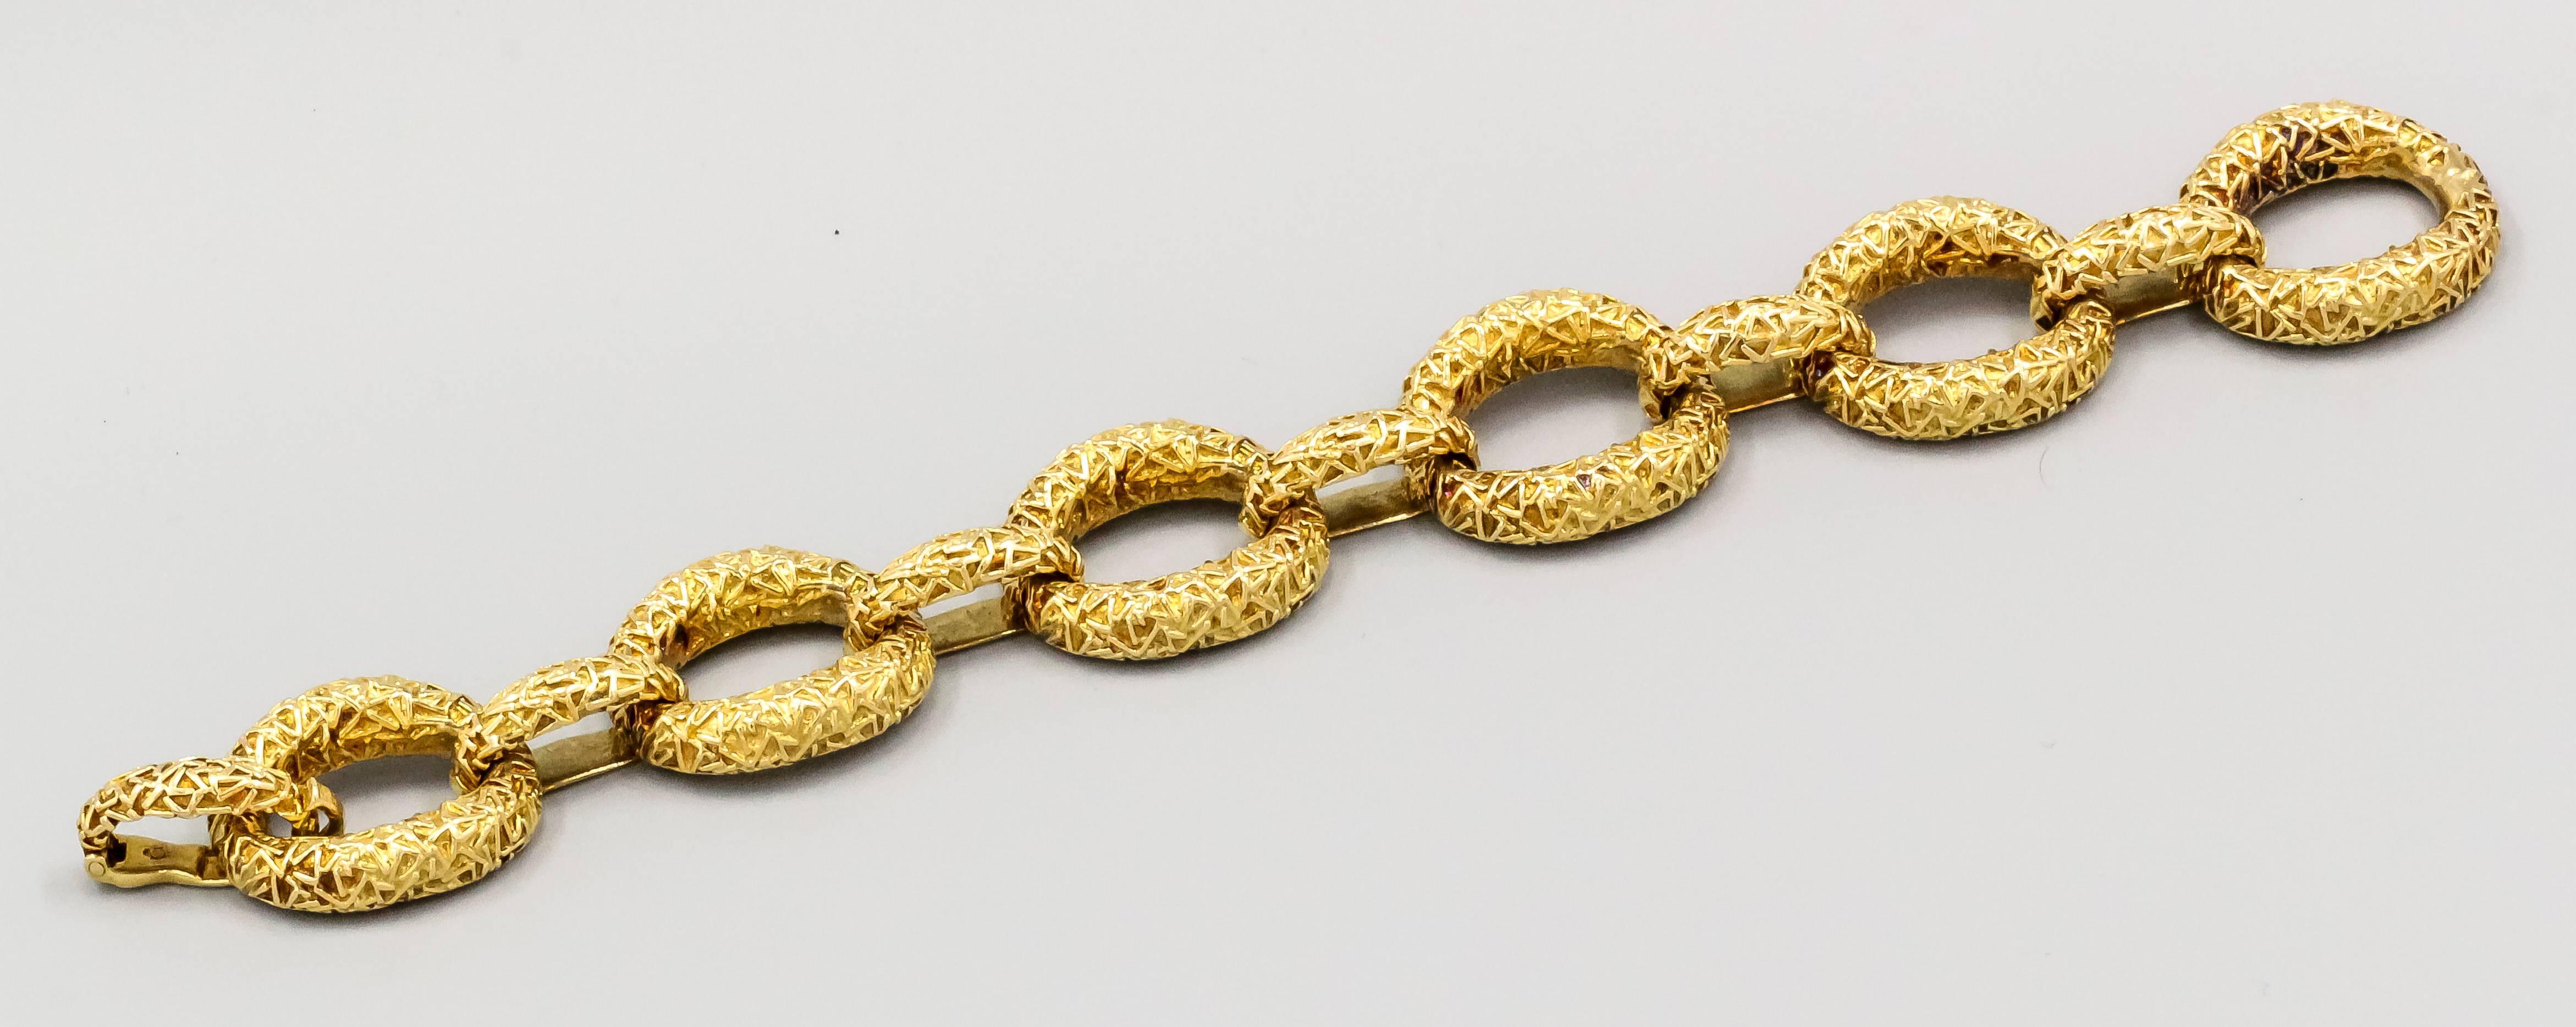 Elegant textured 18K yellow gold link bracelet by Van Cleef & Arpels.
Hallmarks: Van Cleef & Arpels, NY, reference numbers, 18KT.